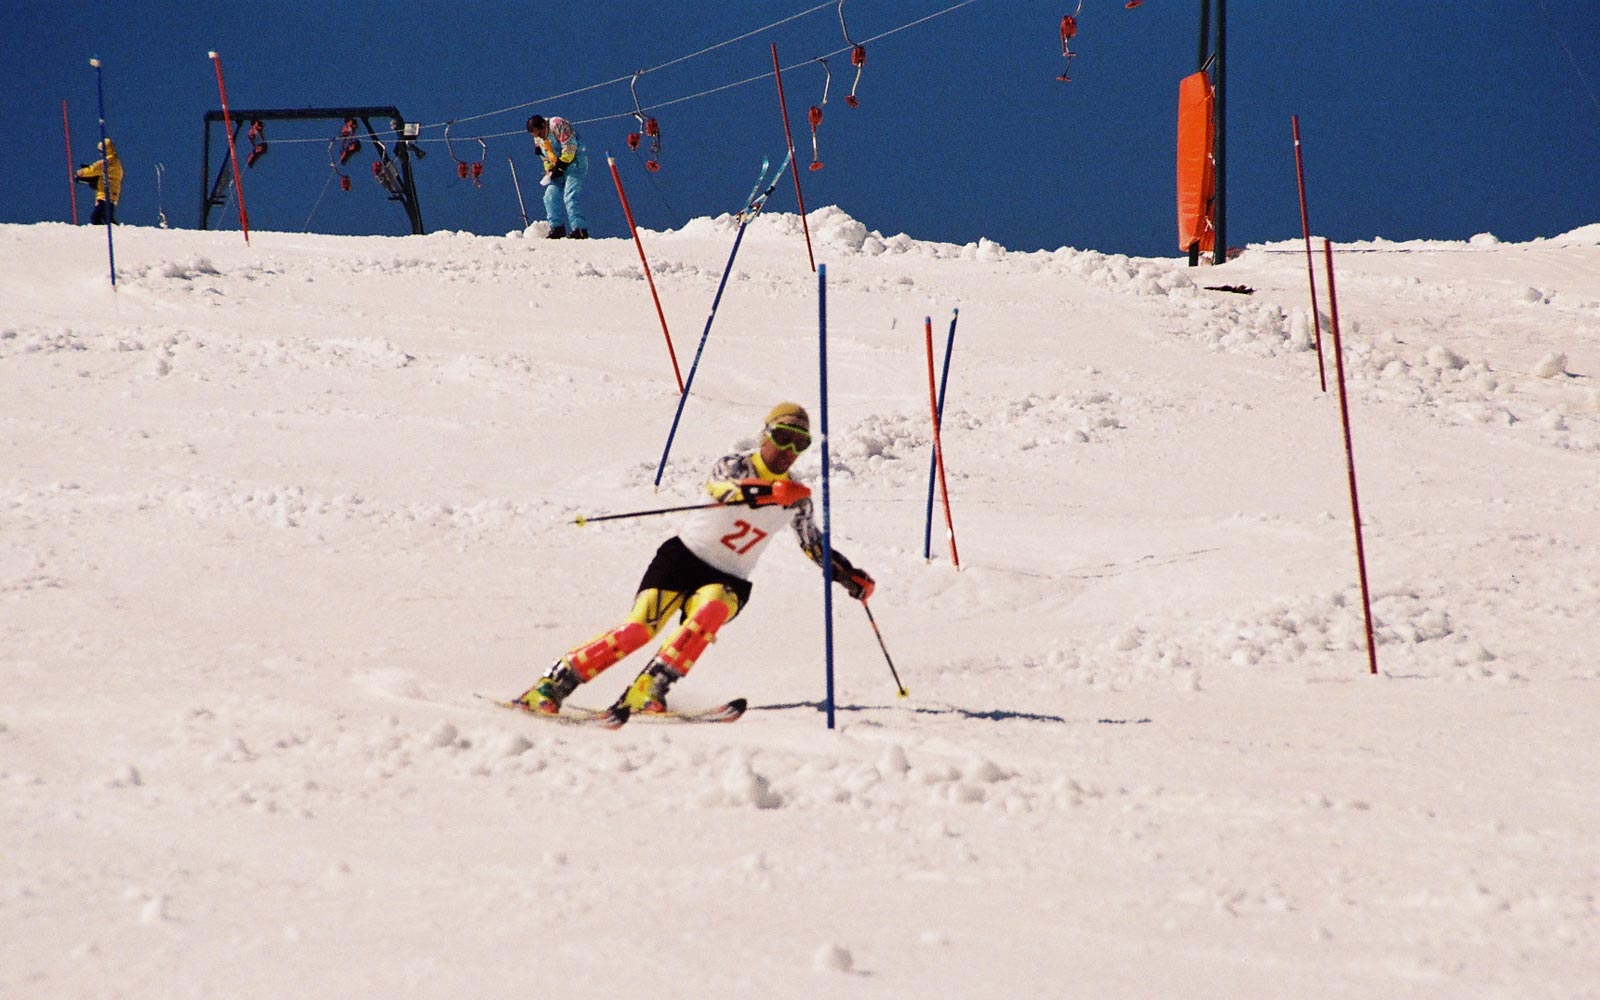 Kaimaktsalan ski center